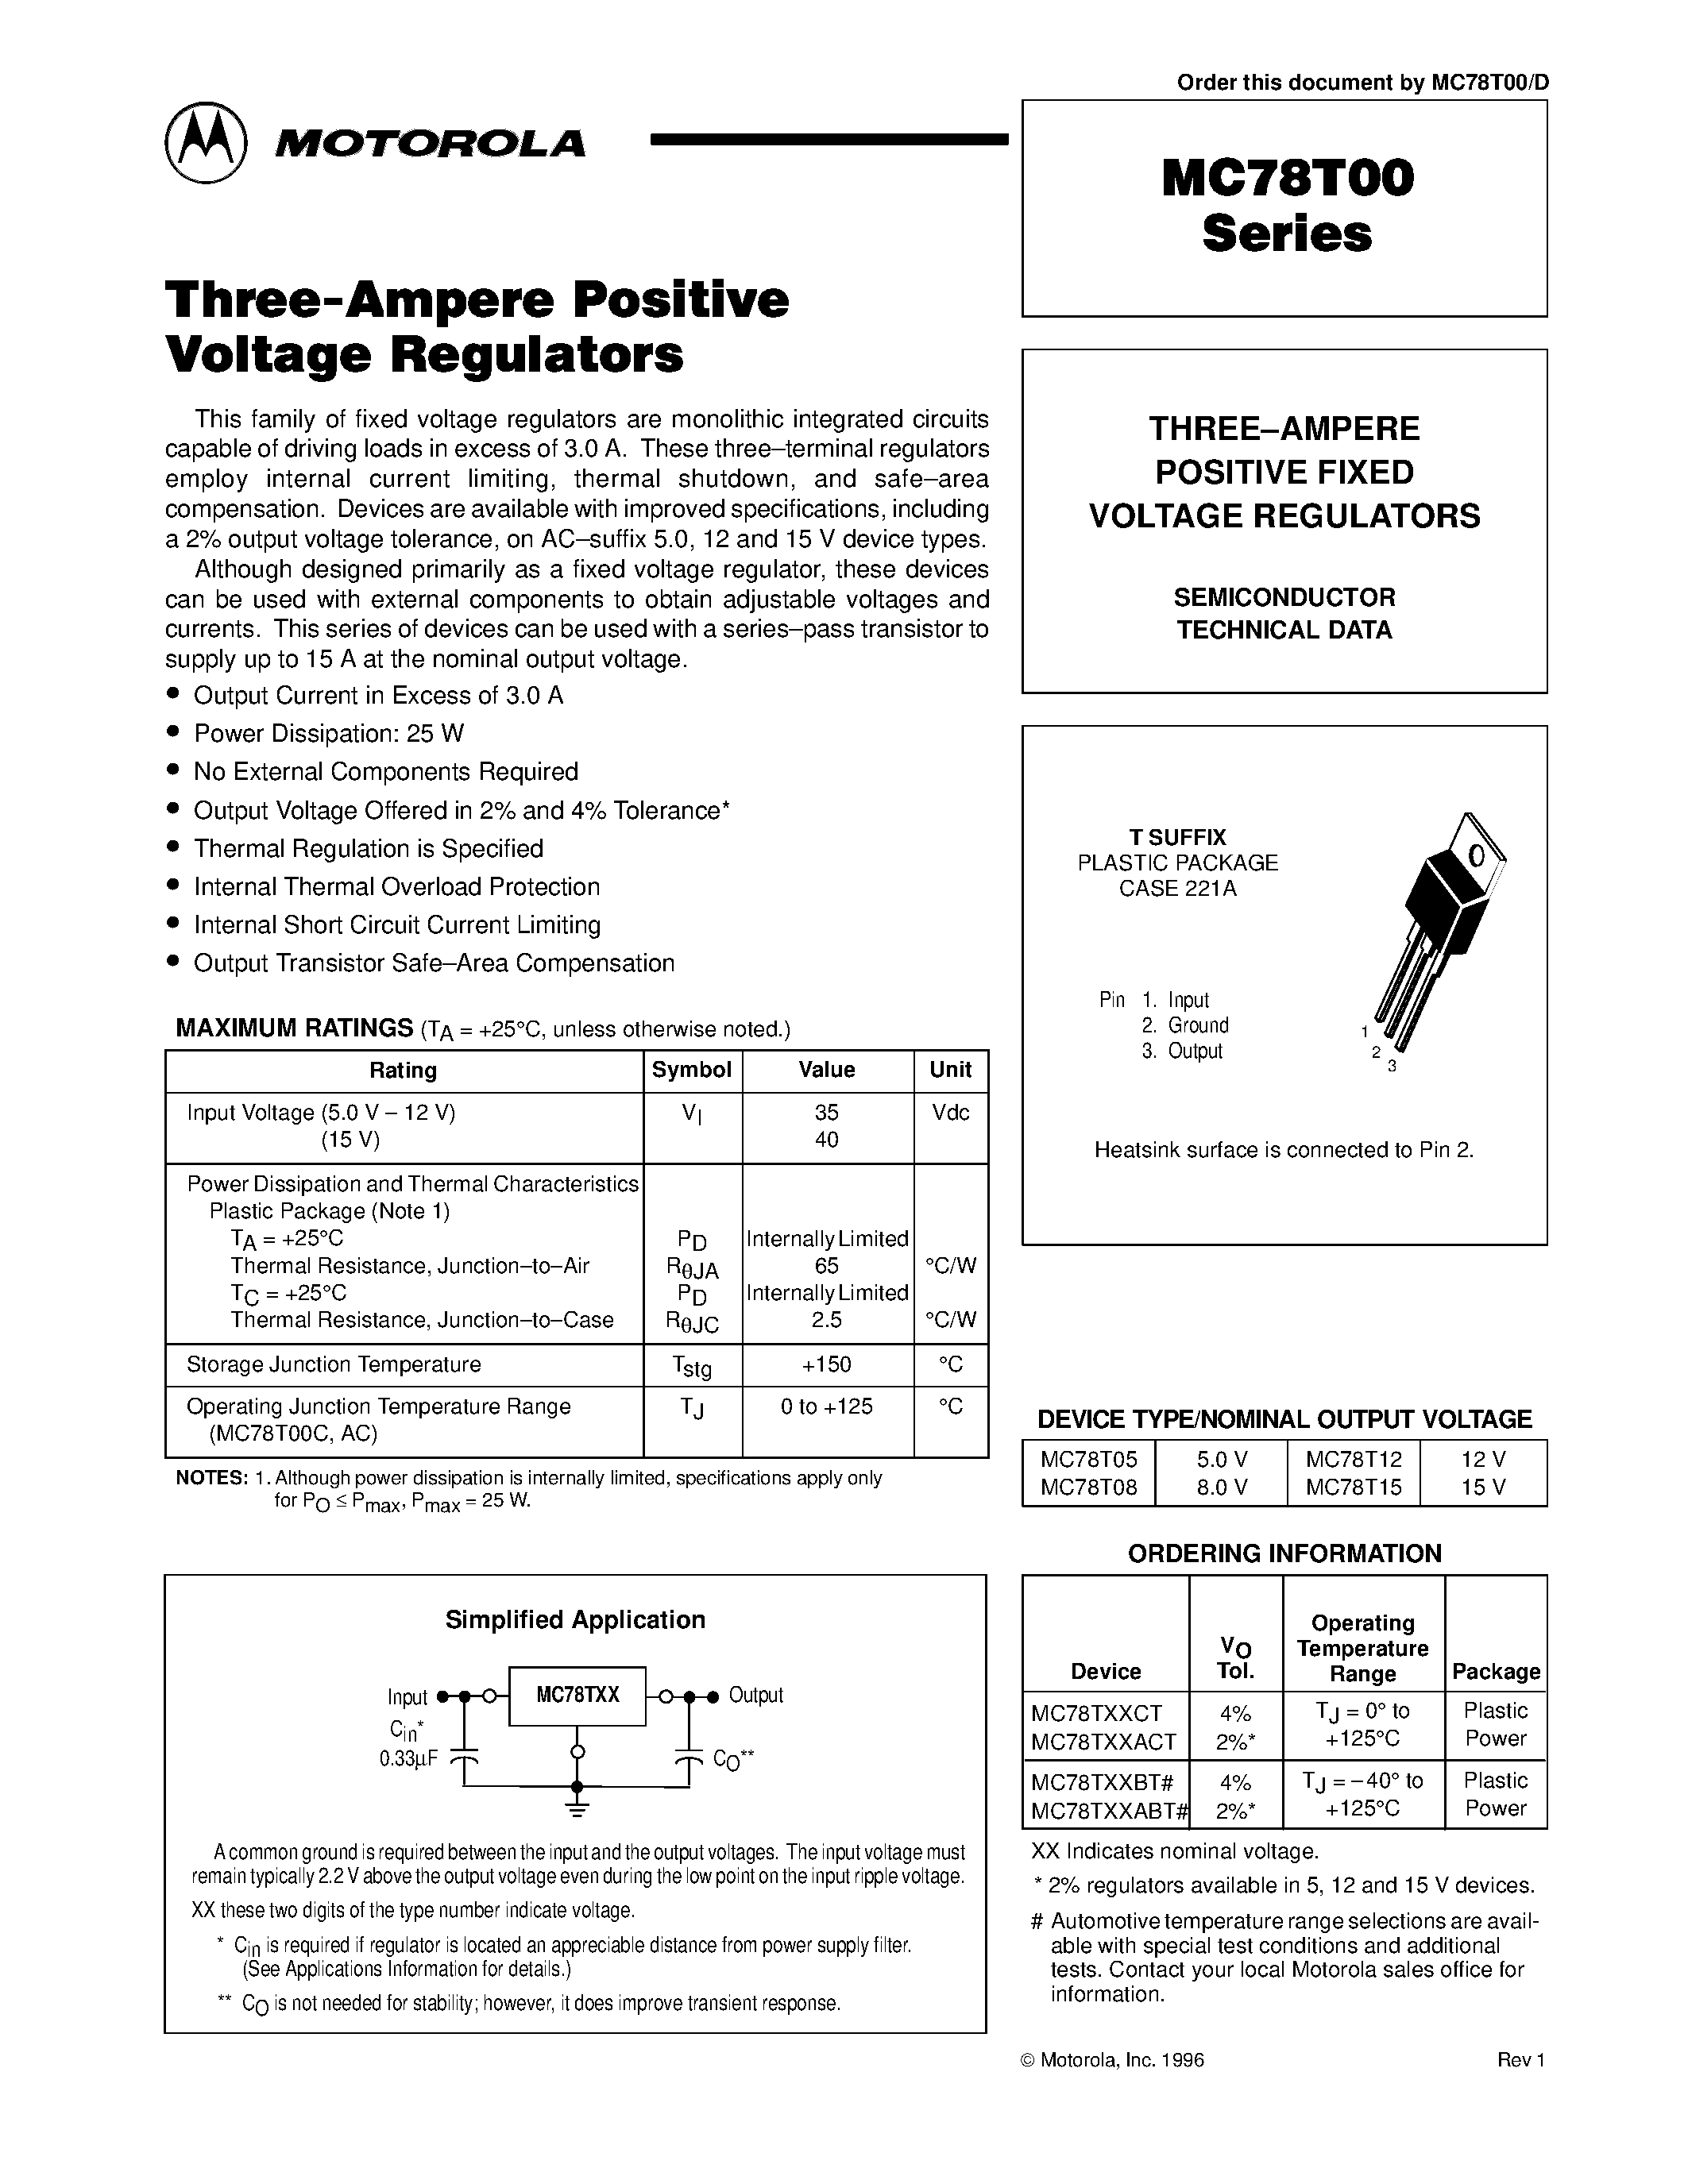 Datasheet MC78T12 - THREE-AMPERE POSITIVE FIXED VOLTAGE REGULATORS page 1